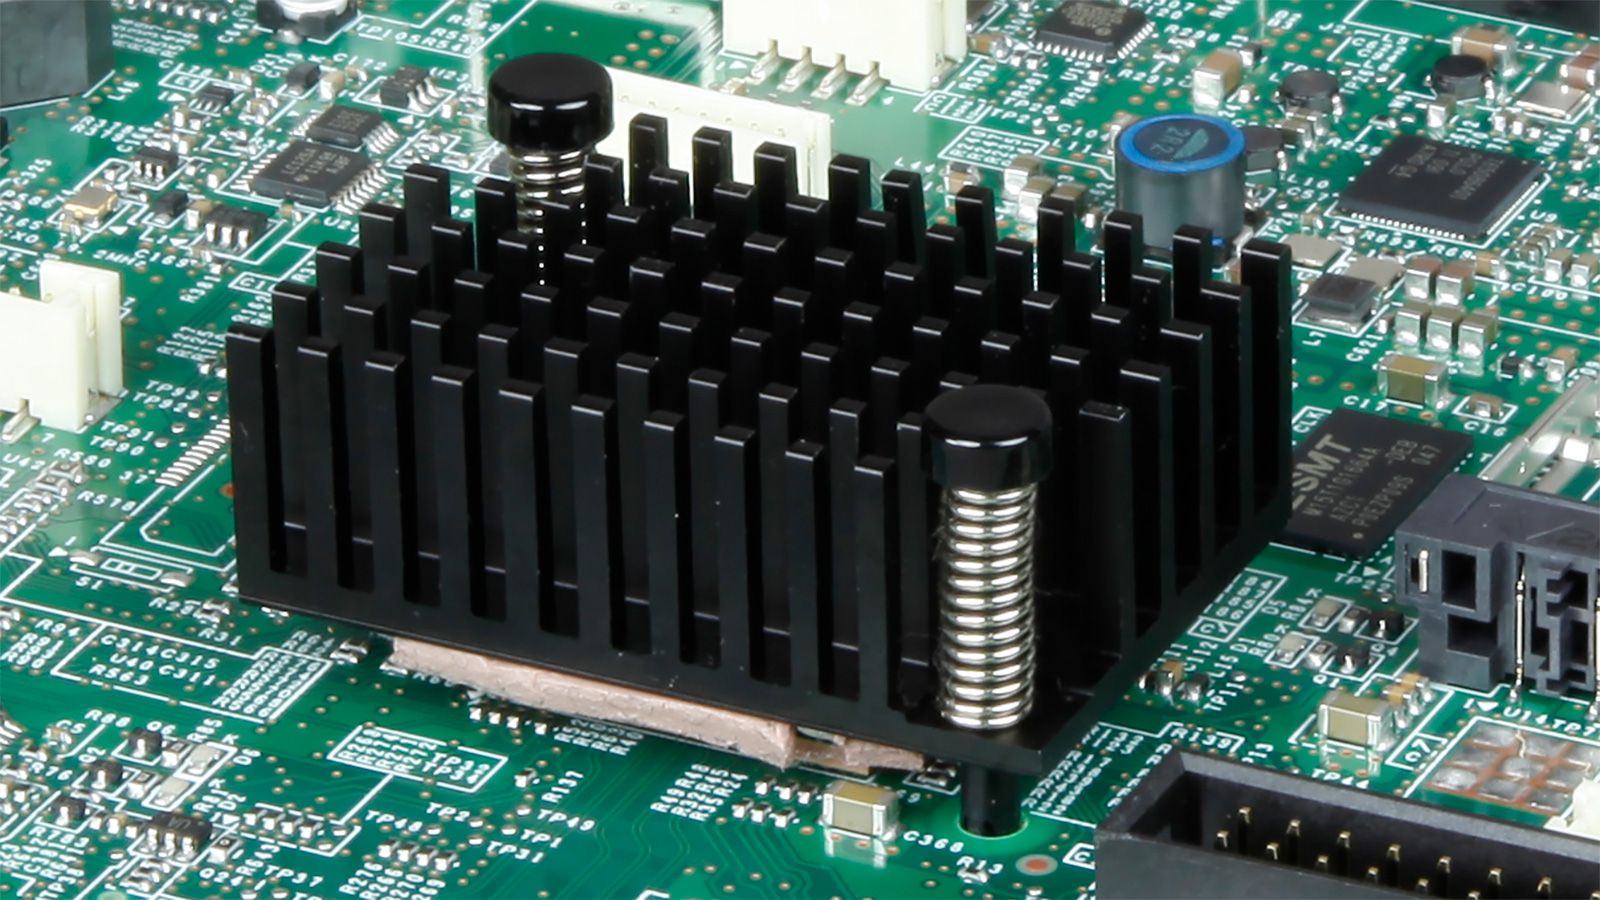 TASCAM史上最上級の音質を支える96kHz、54-bit floatの内部処理、 FPGA ミキシングエンジンを搭載